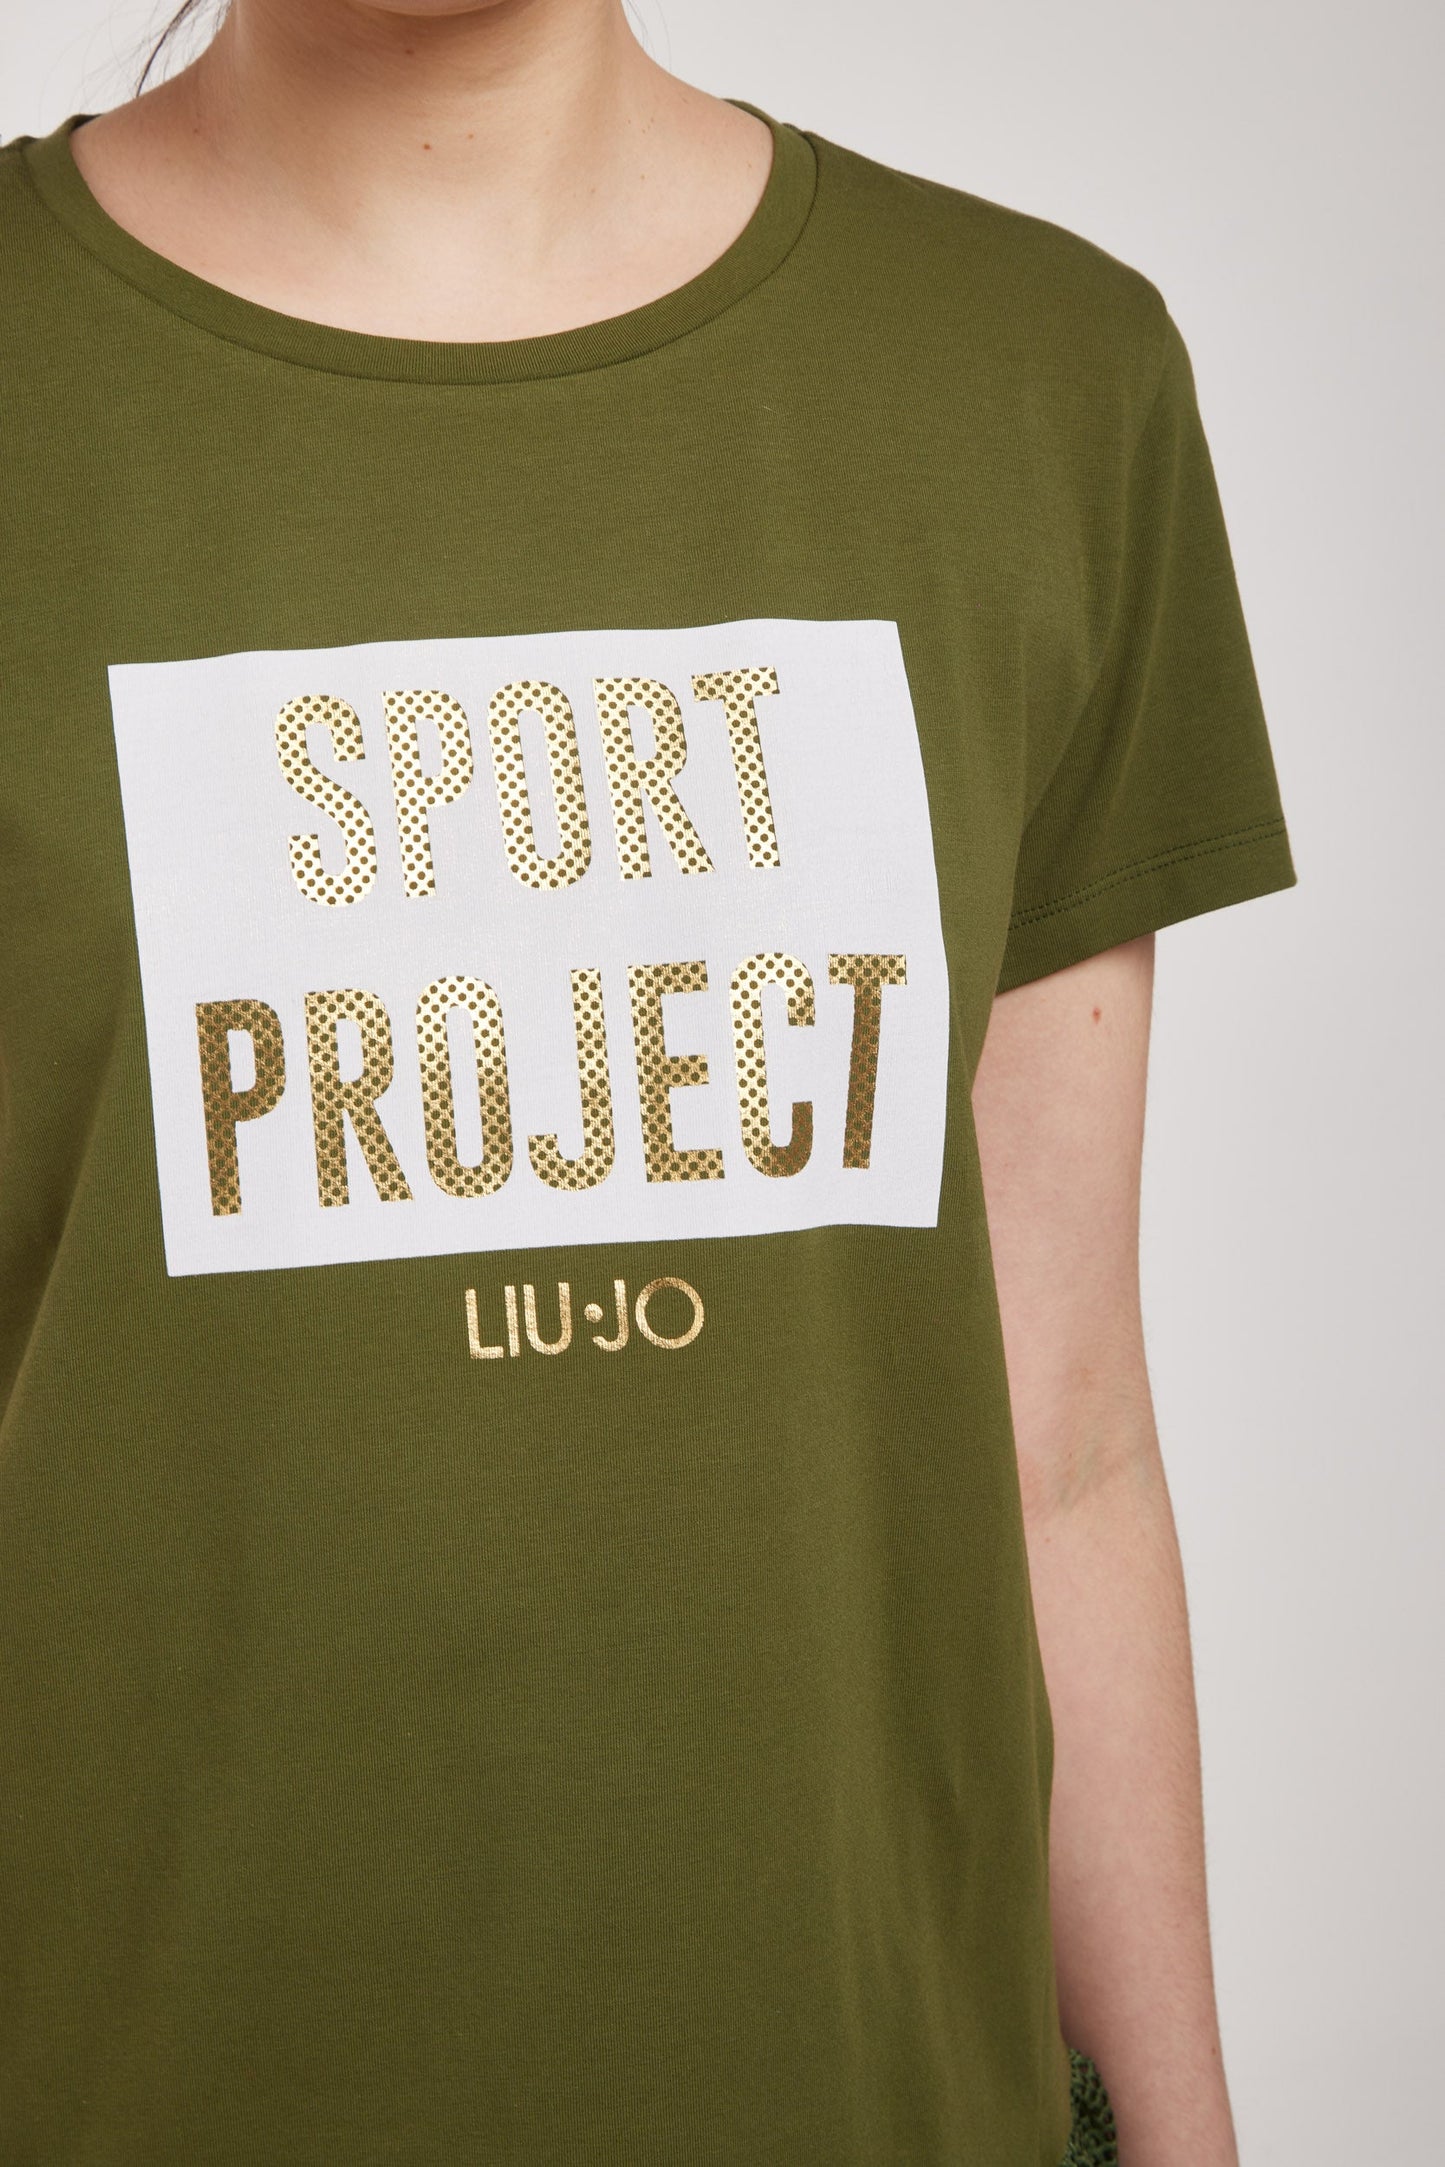 LIU-JO T-Shirt "SPORT PROJECT" Verde Militare